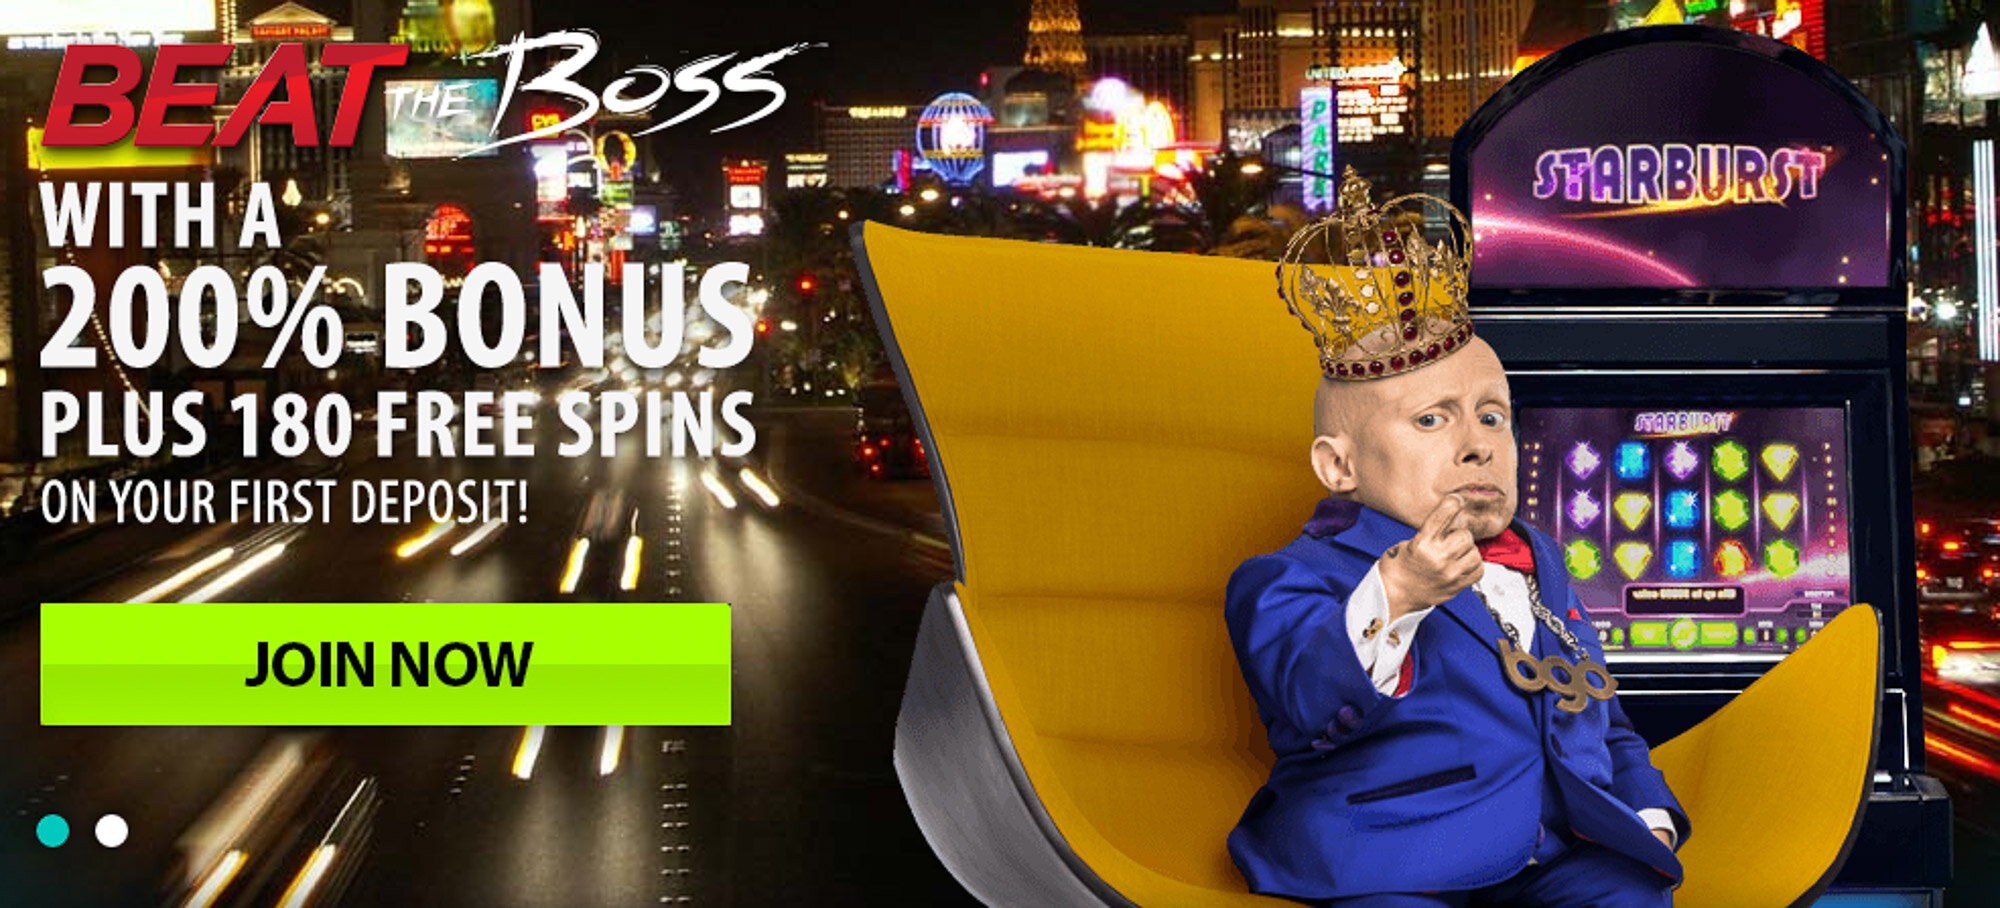 beat-the-boss-bgo-spins.jpg